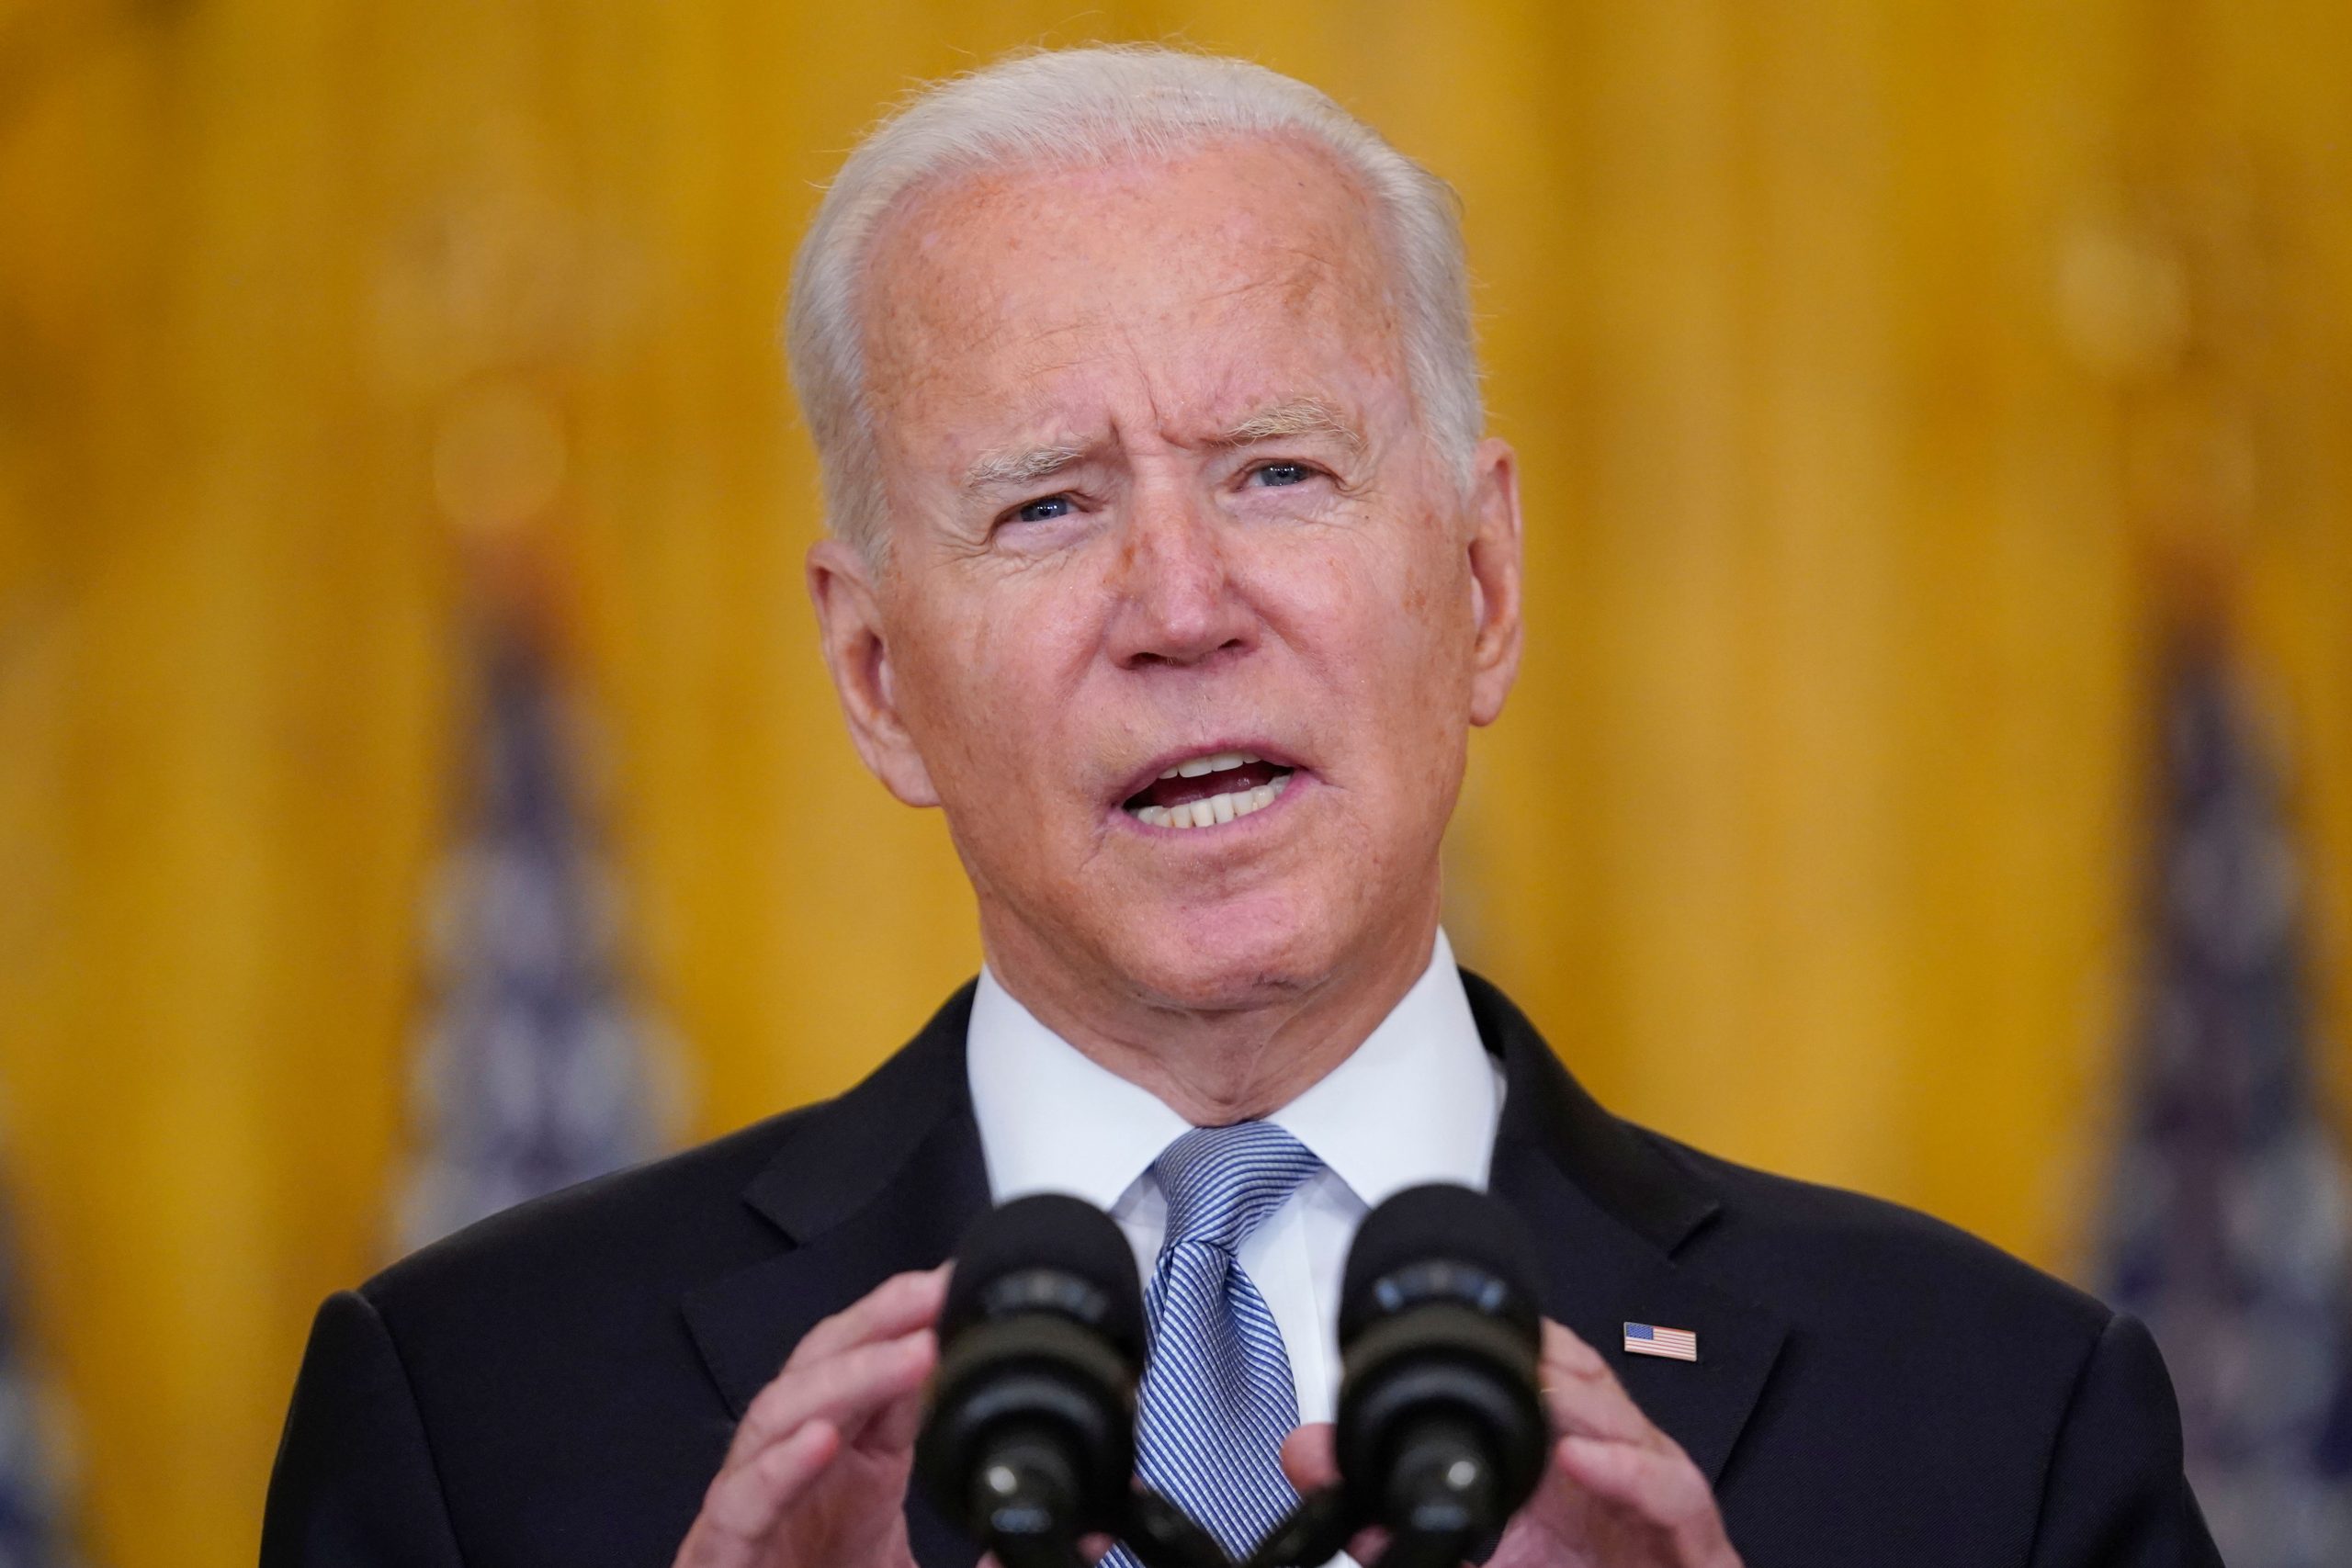 ‘I am a gaffe machine’: Decrypting Joe Biden’s great American goof-ups